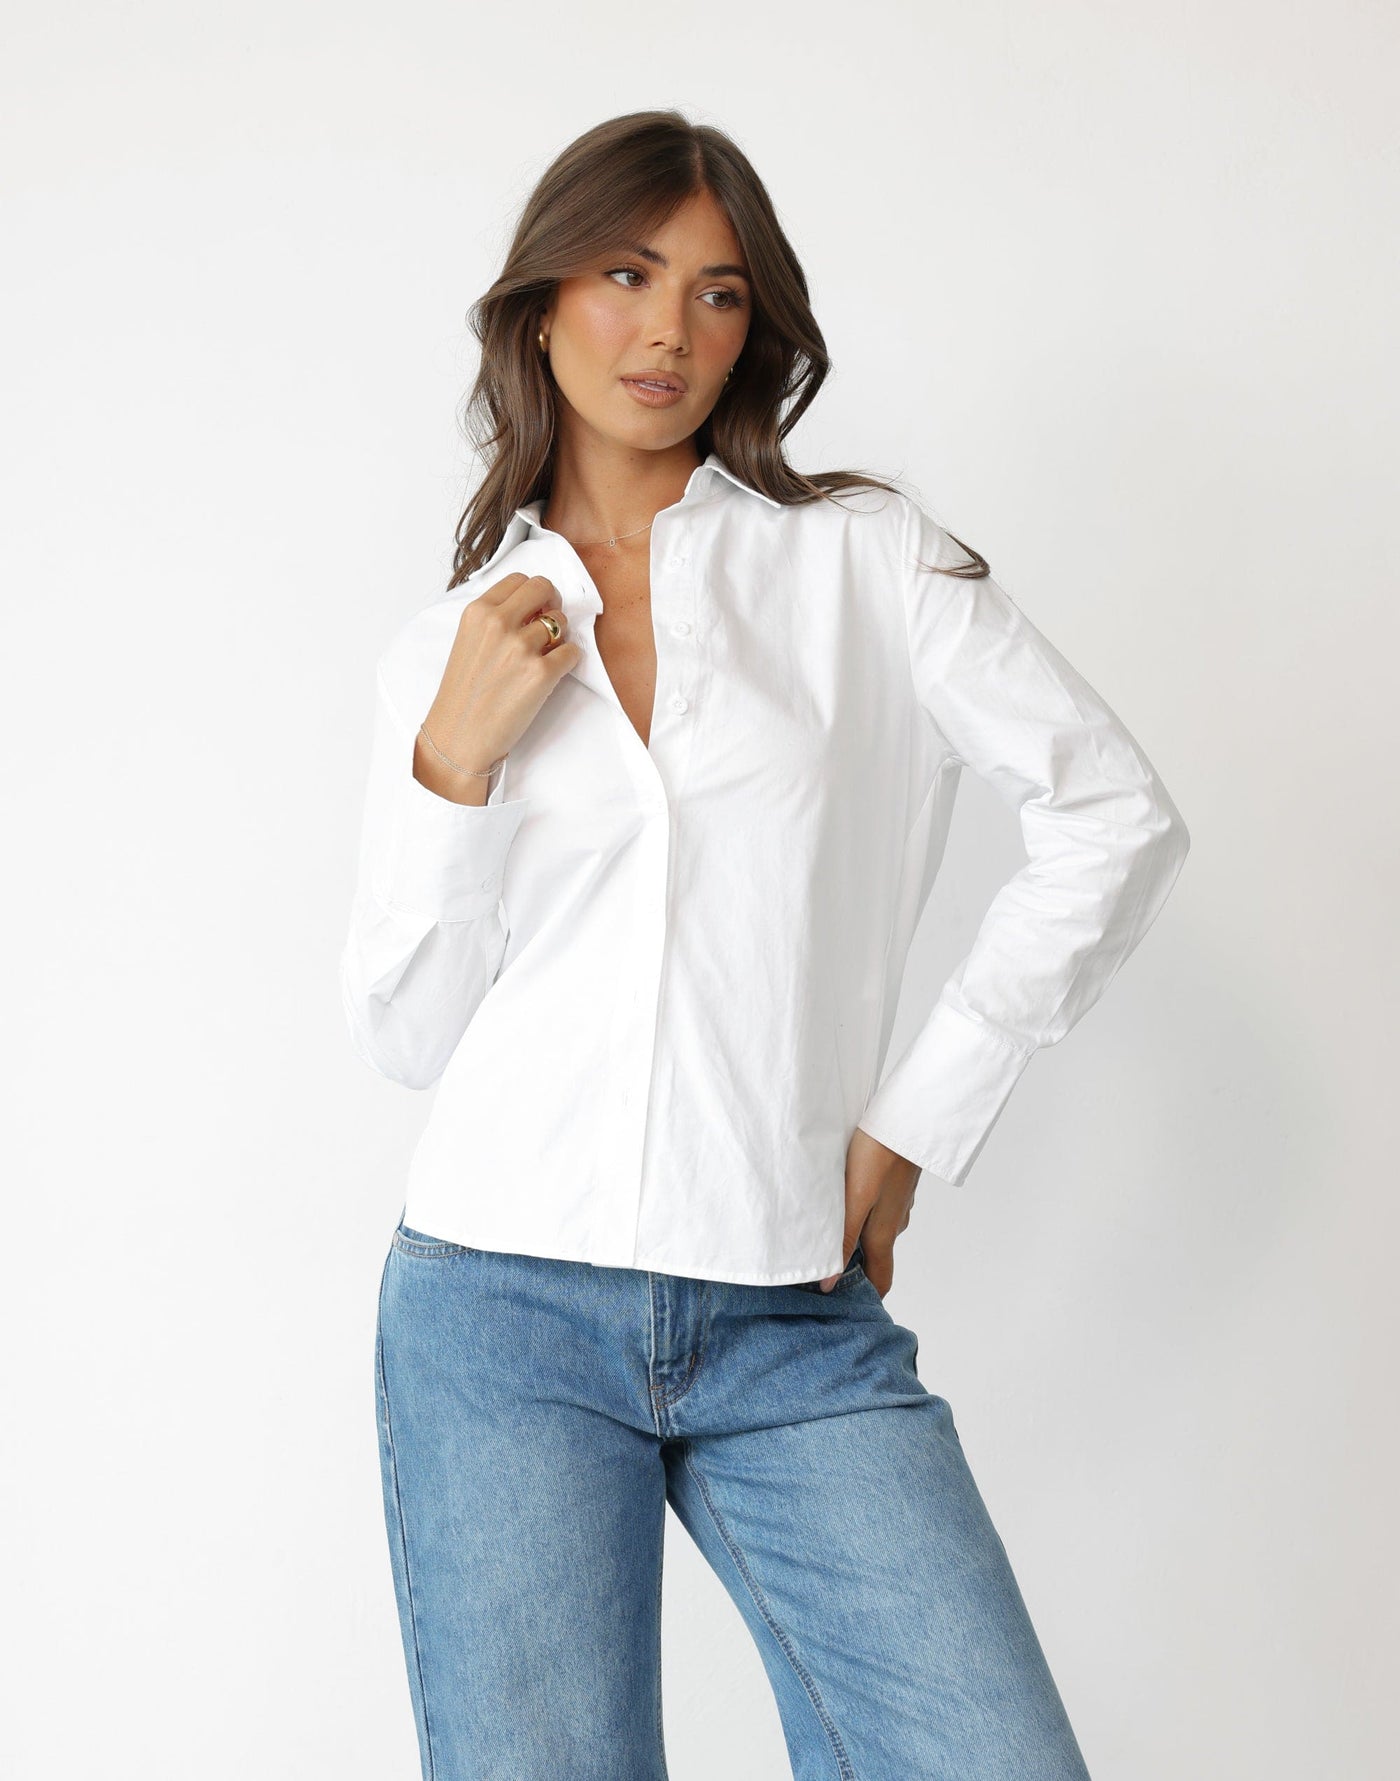 Amory Shirt (White) - - Women's Top - Charcoal Clothing